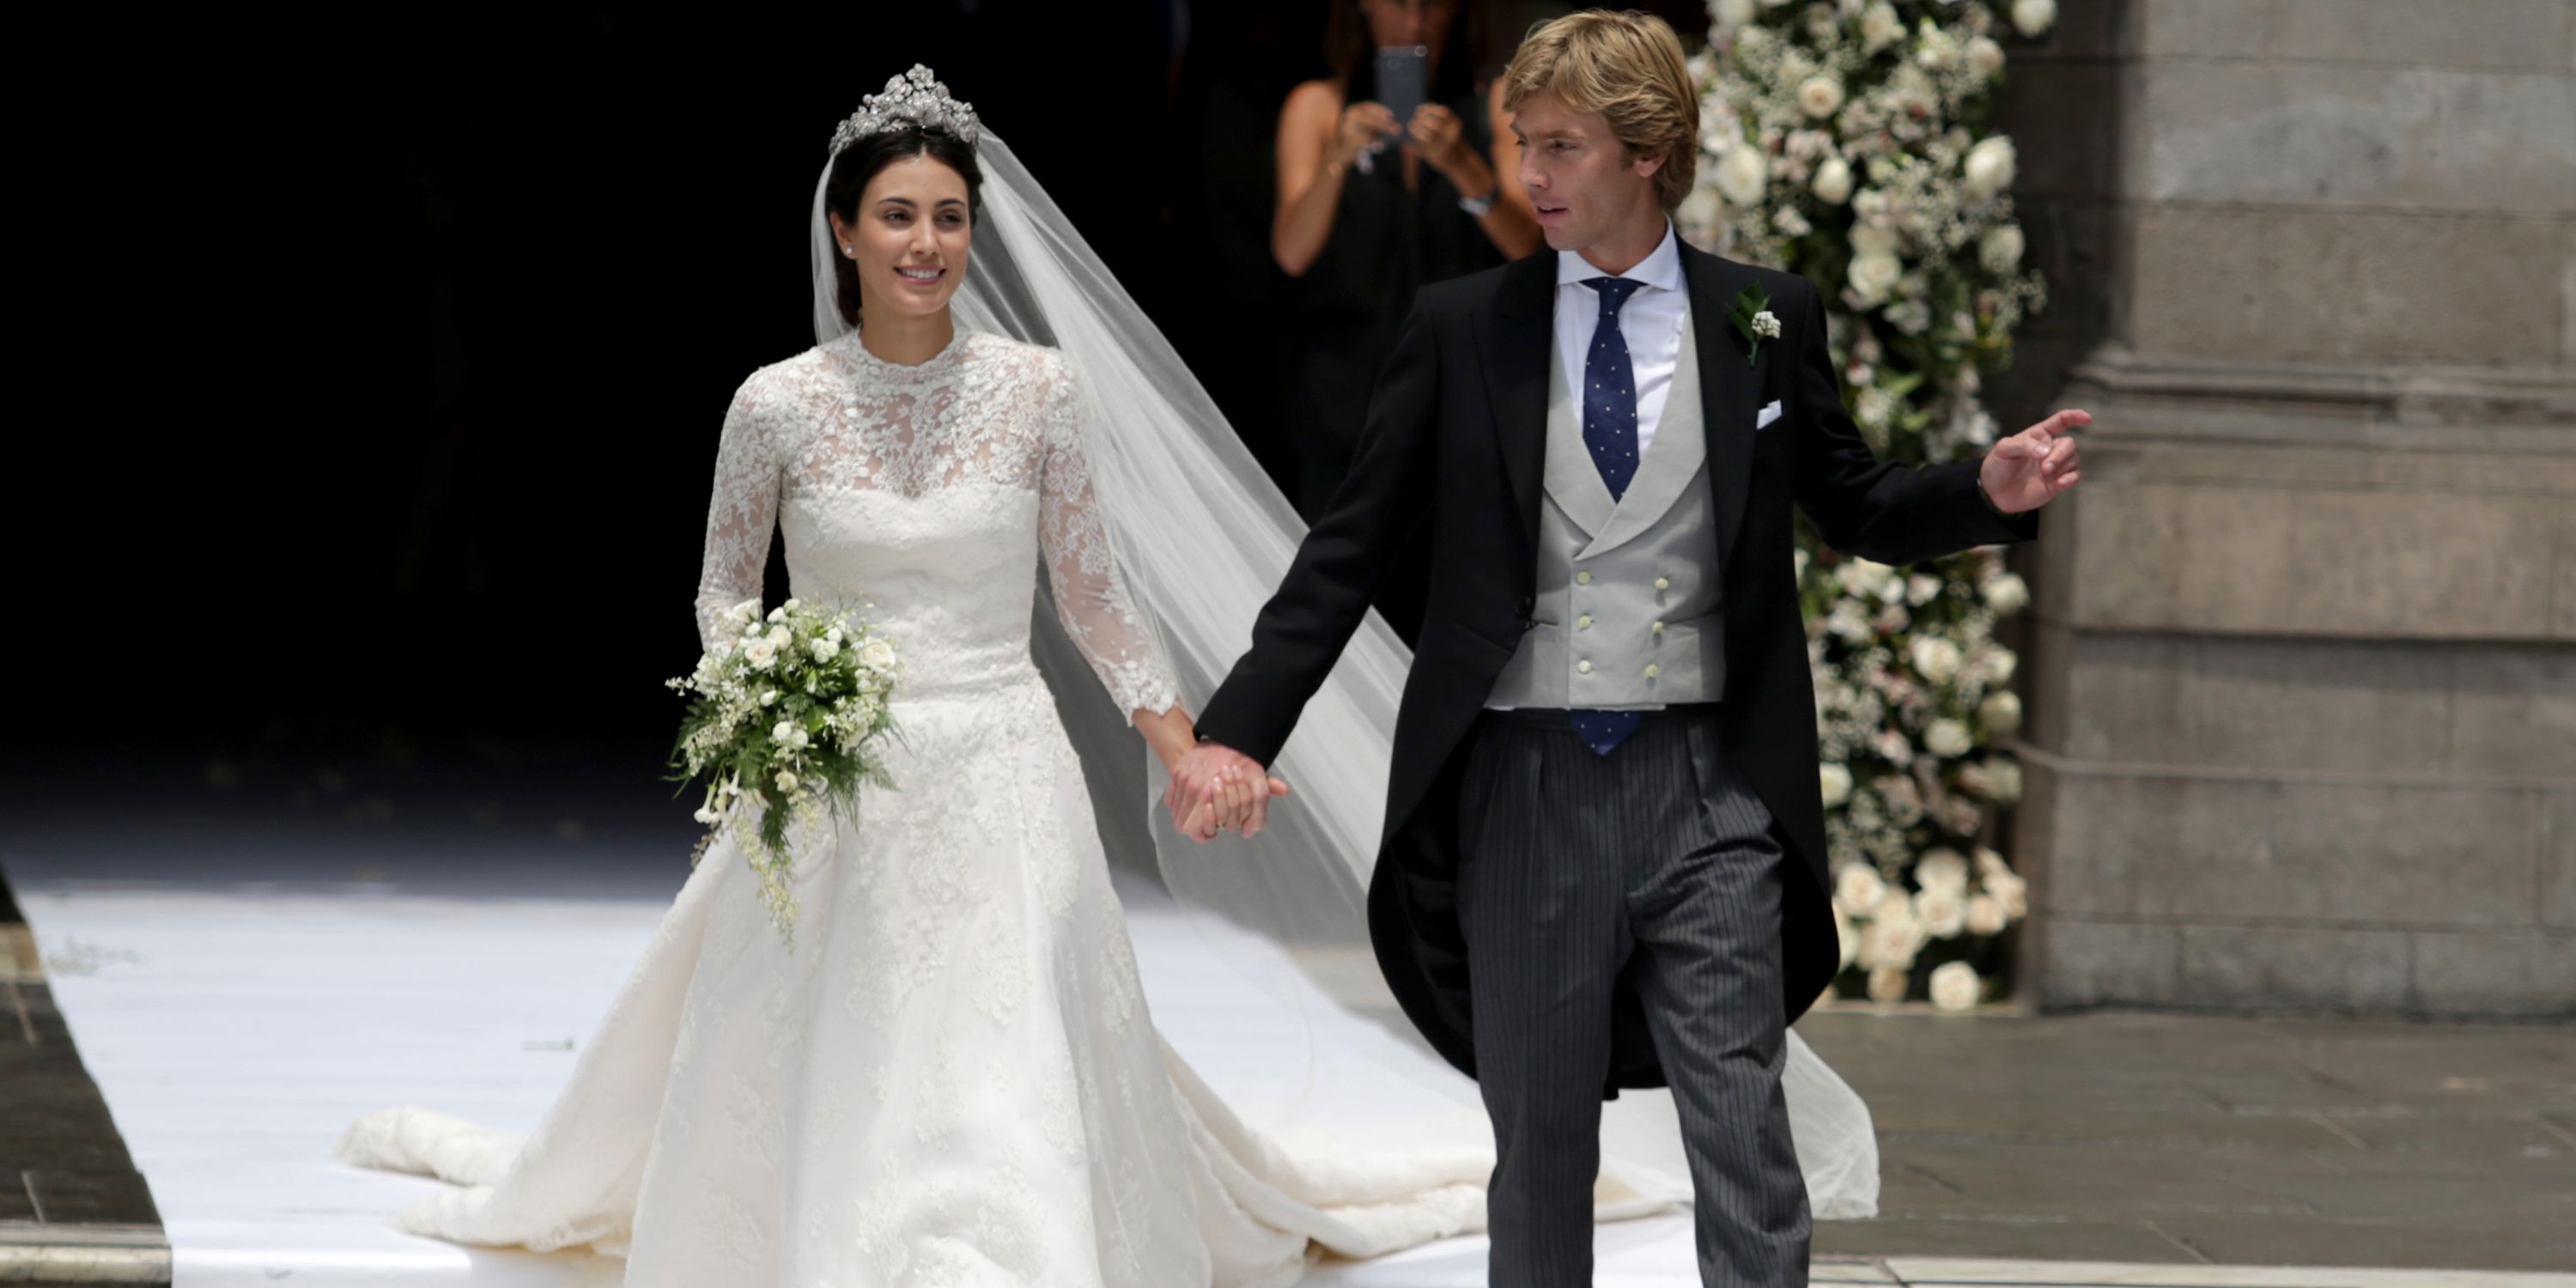 royal wedding gowns